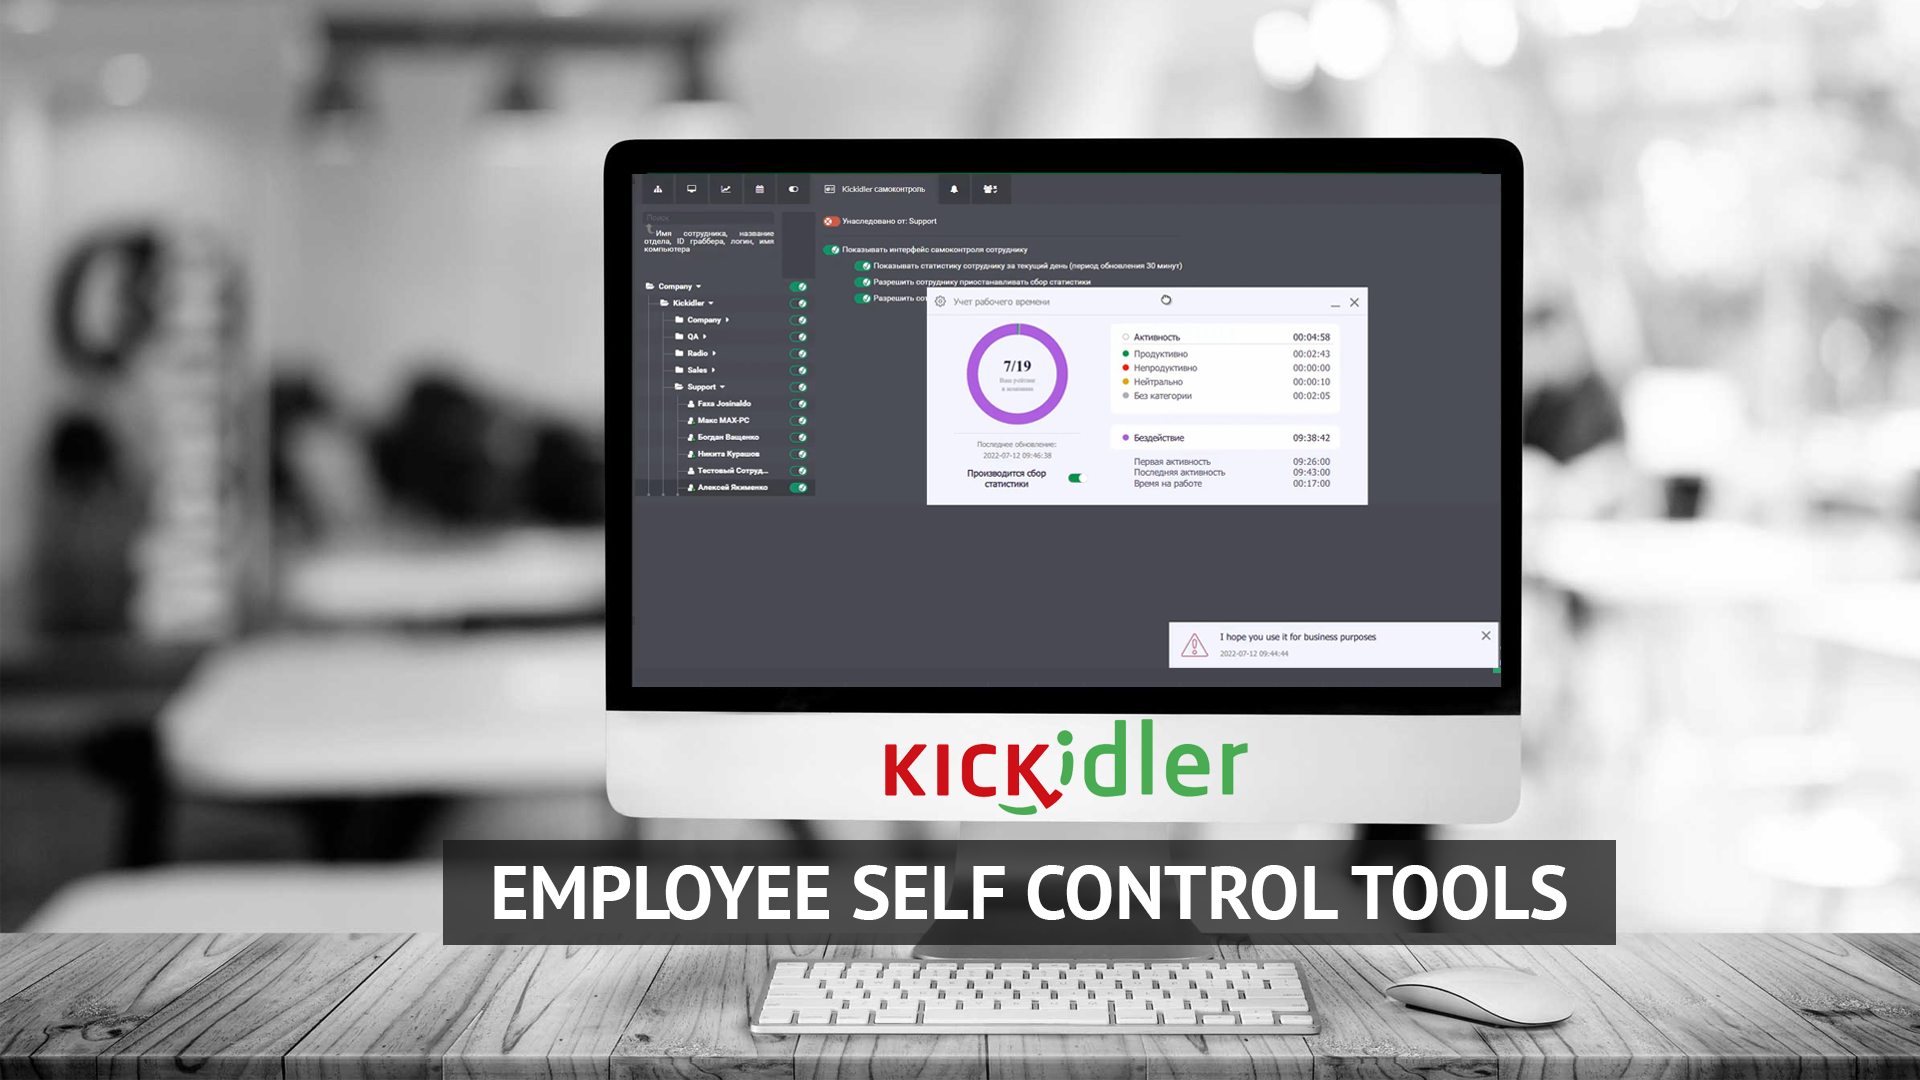  Employee self control tools